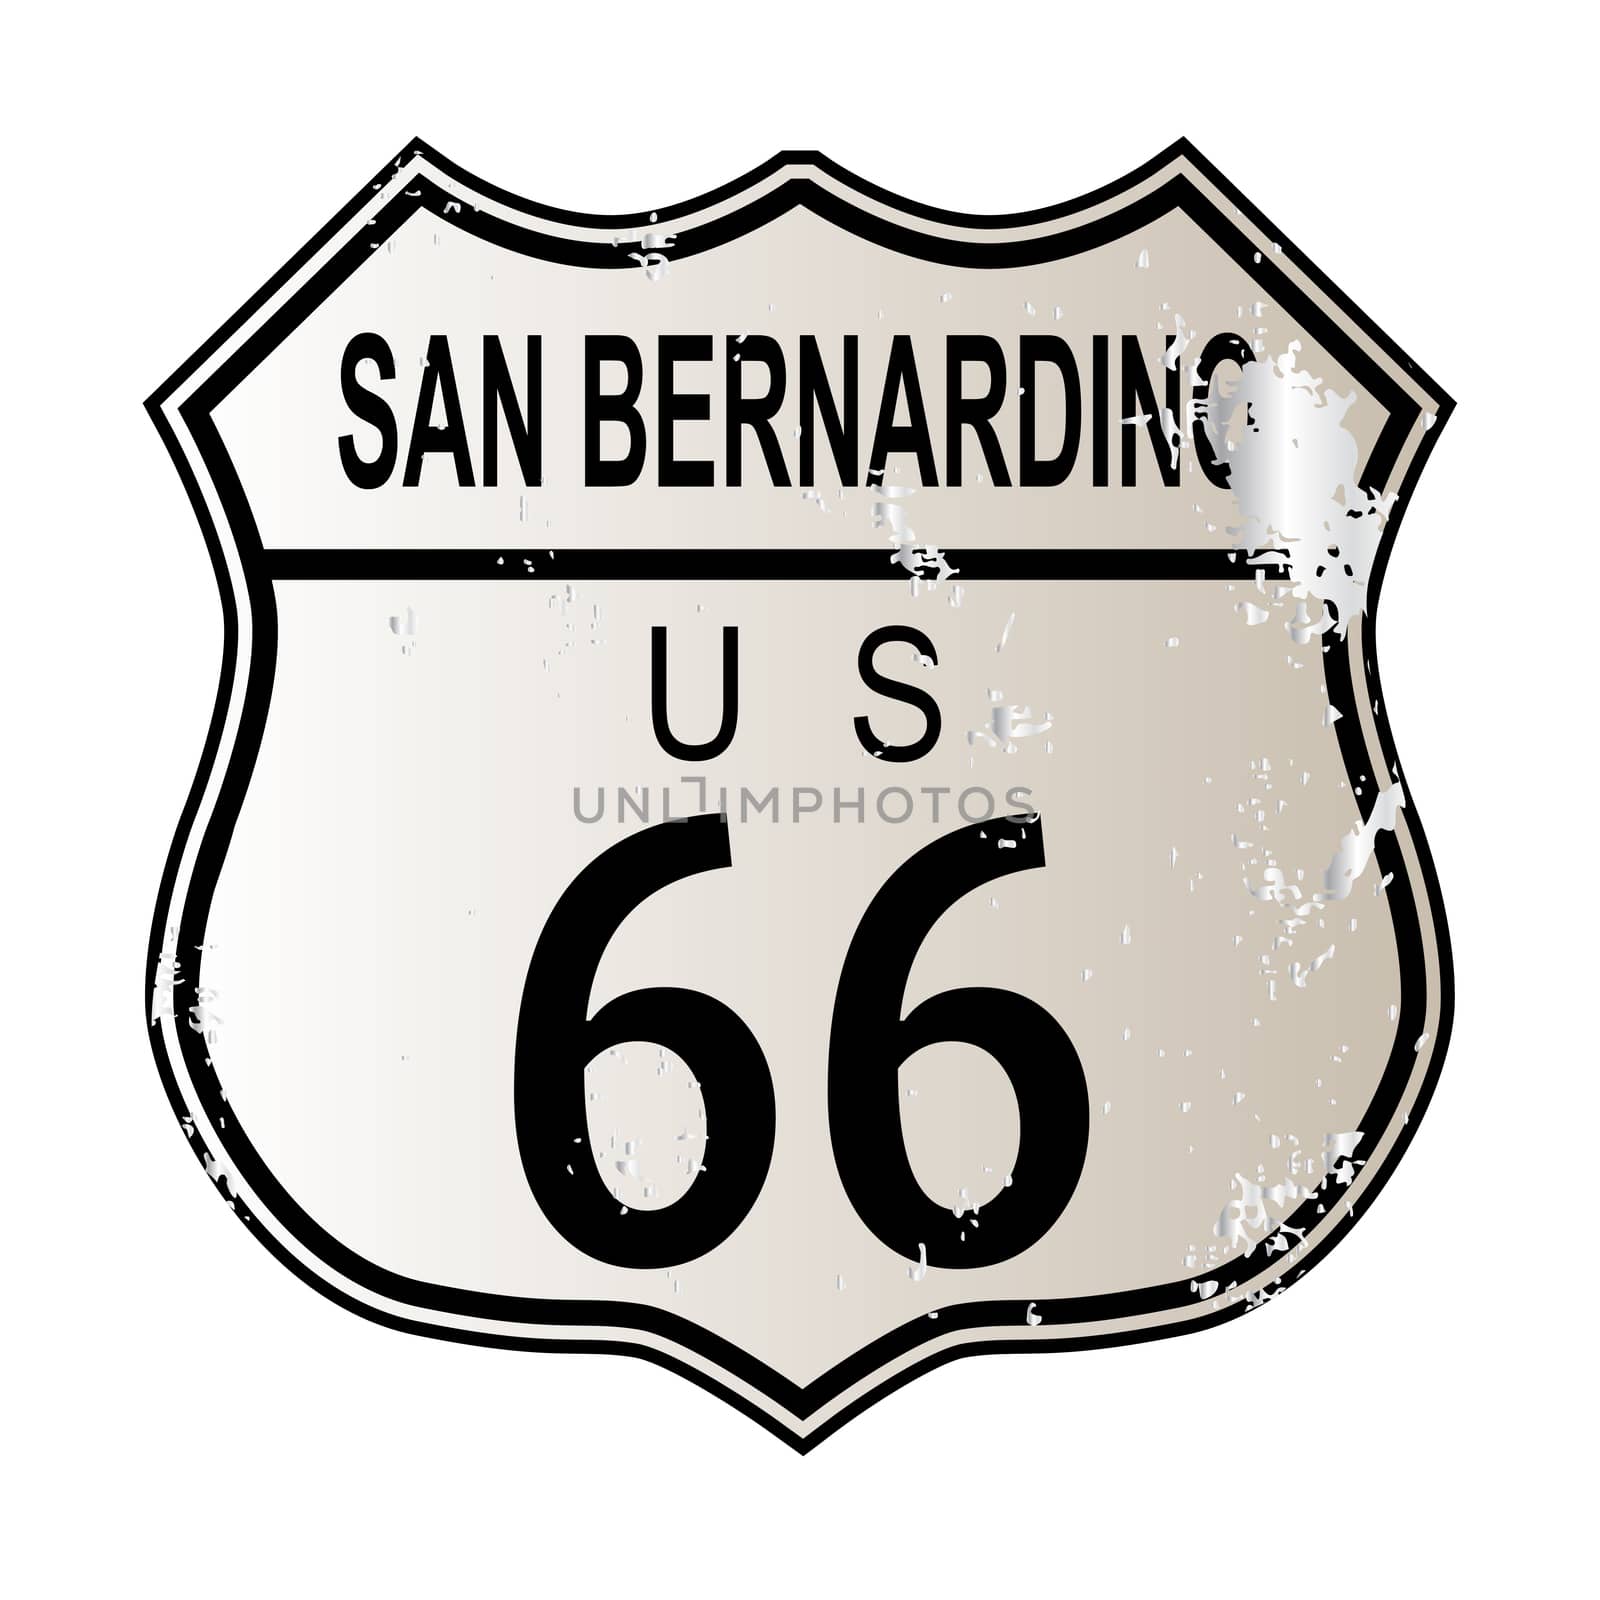 San Bernardino Route 66 Highway Sign by Bigalbaloo